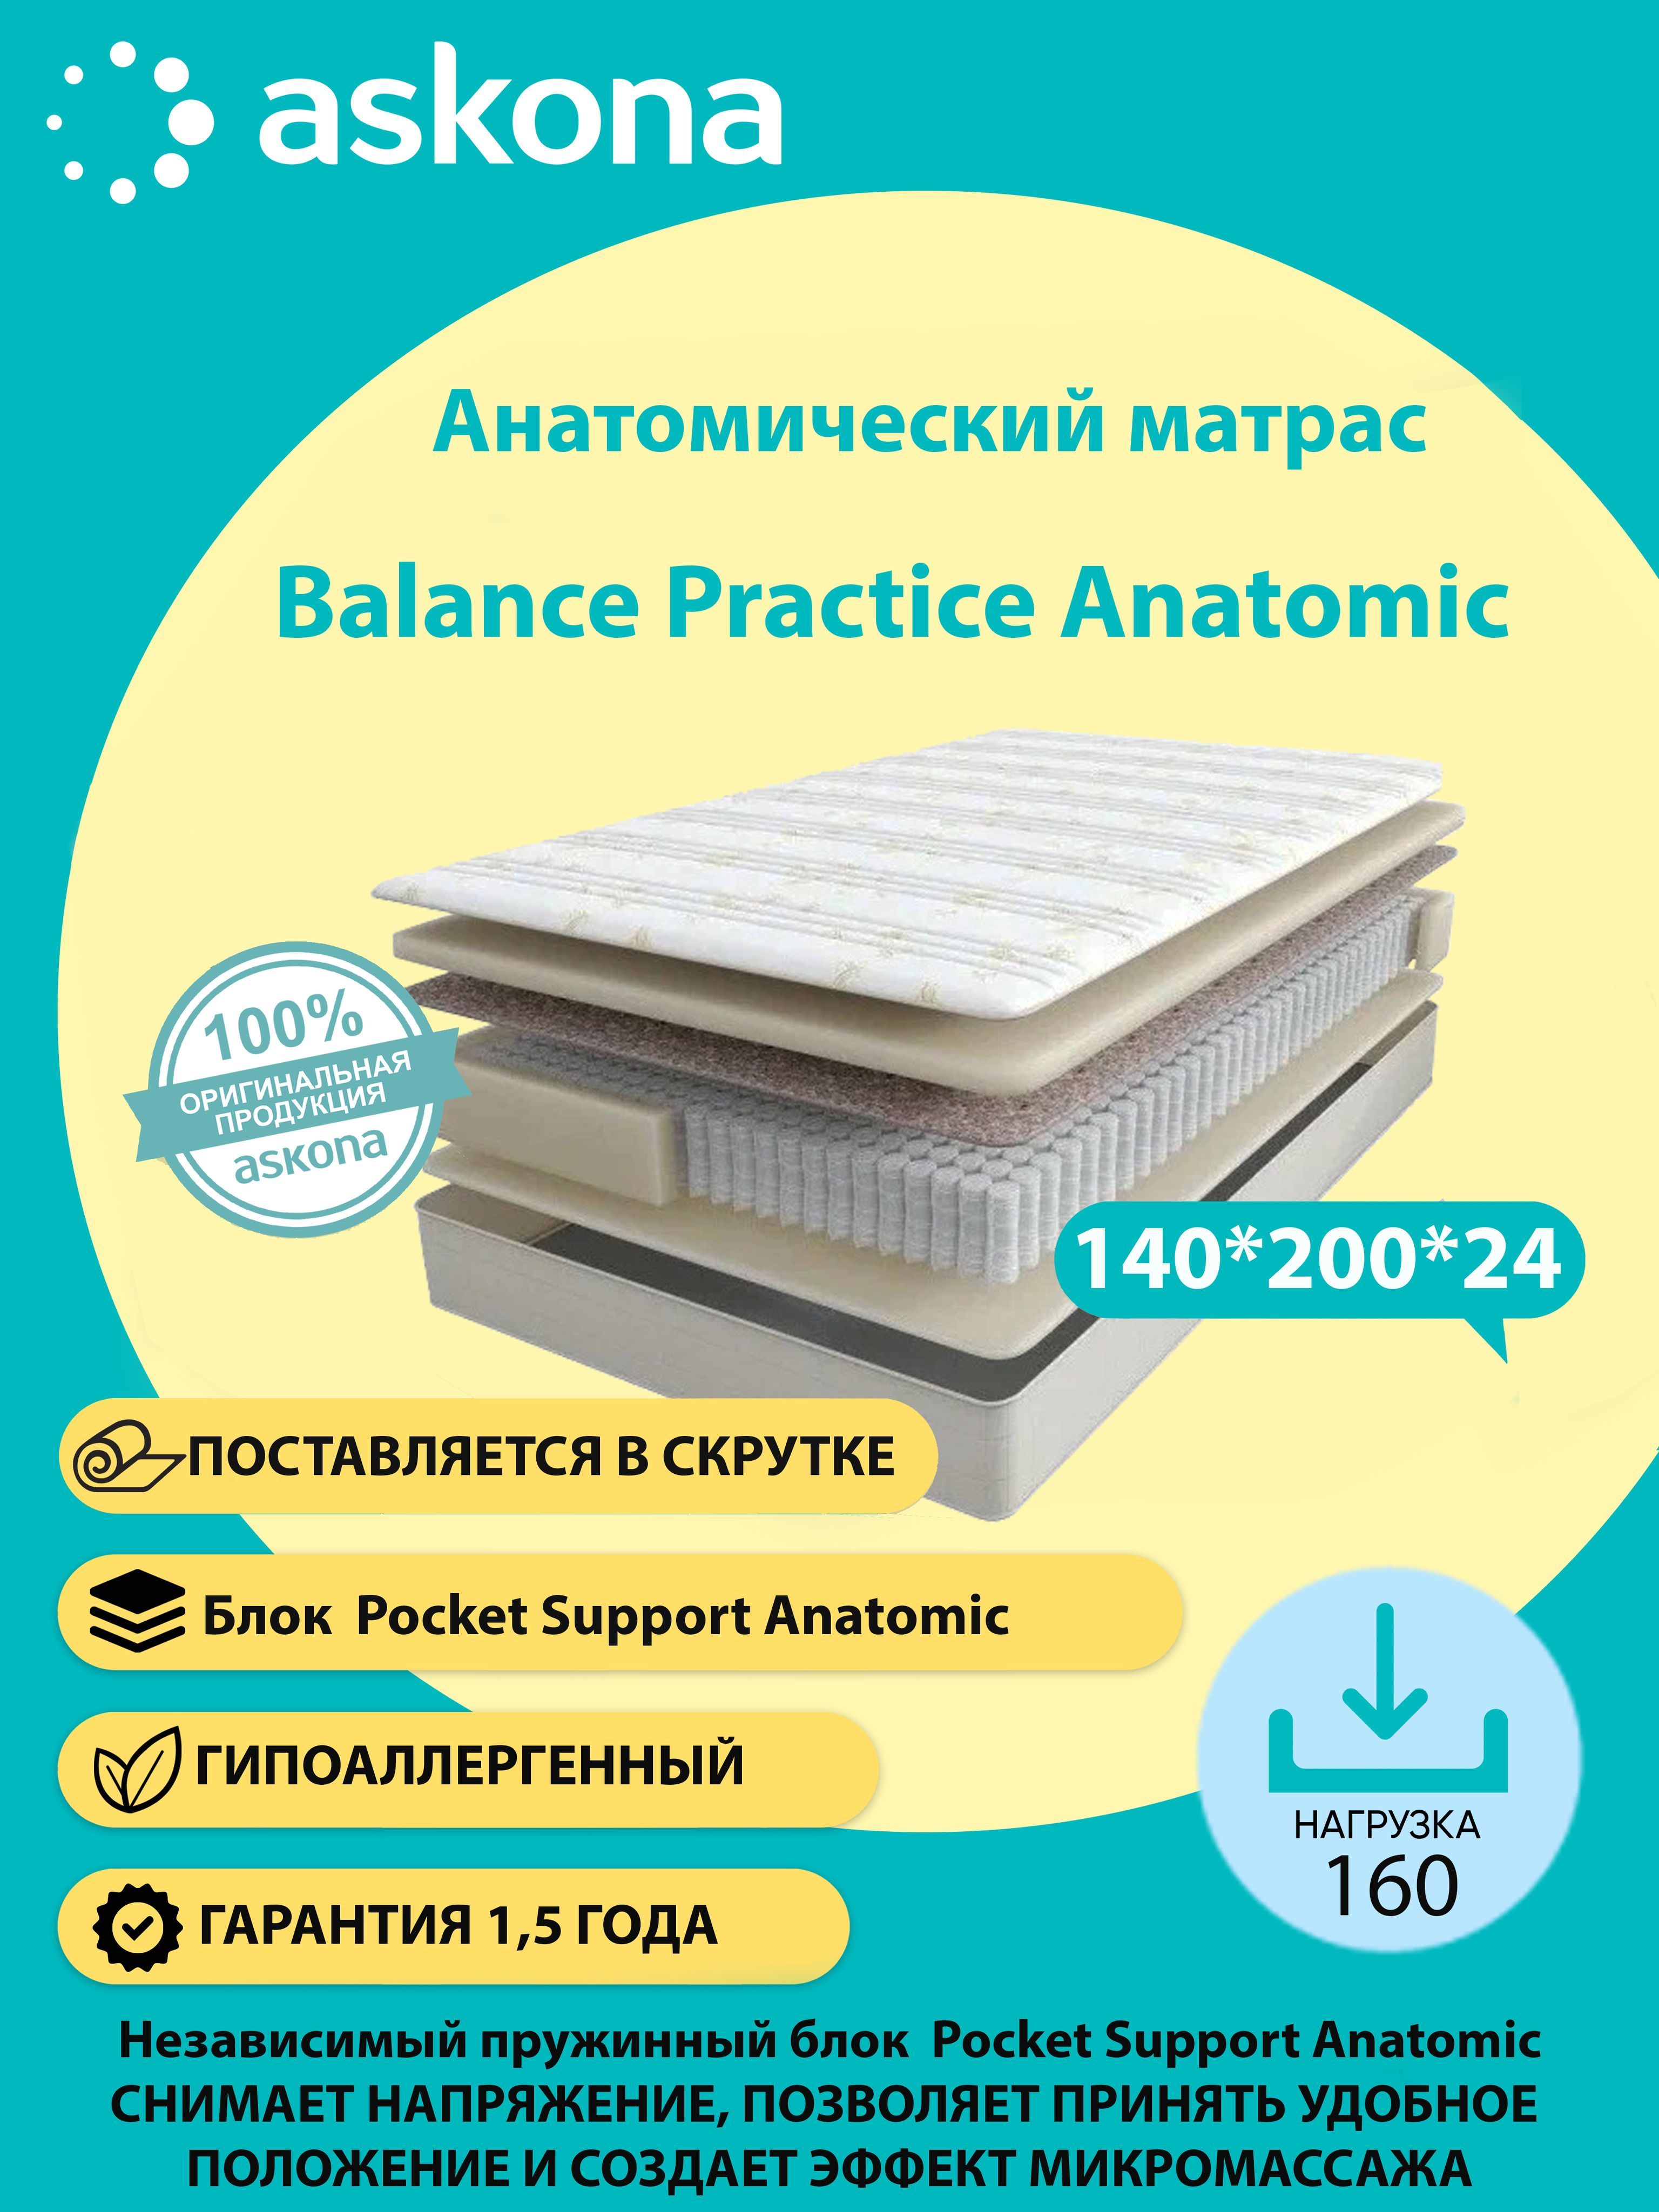 Матрас askona balance forma 160 200